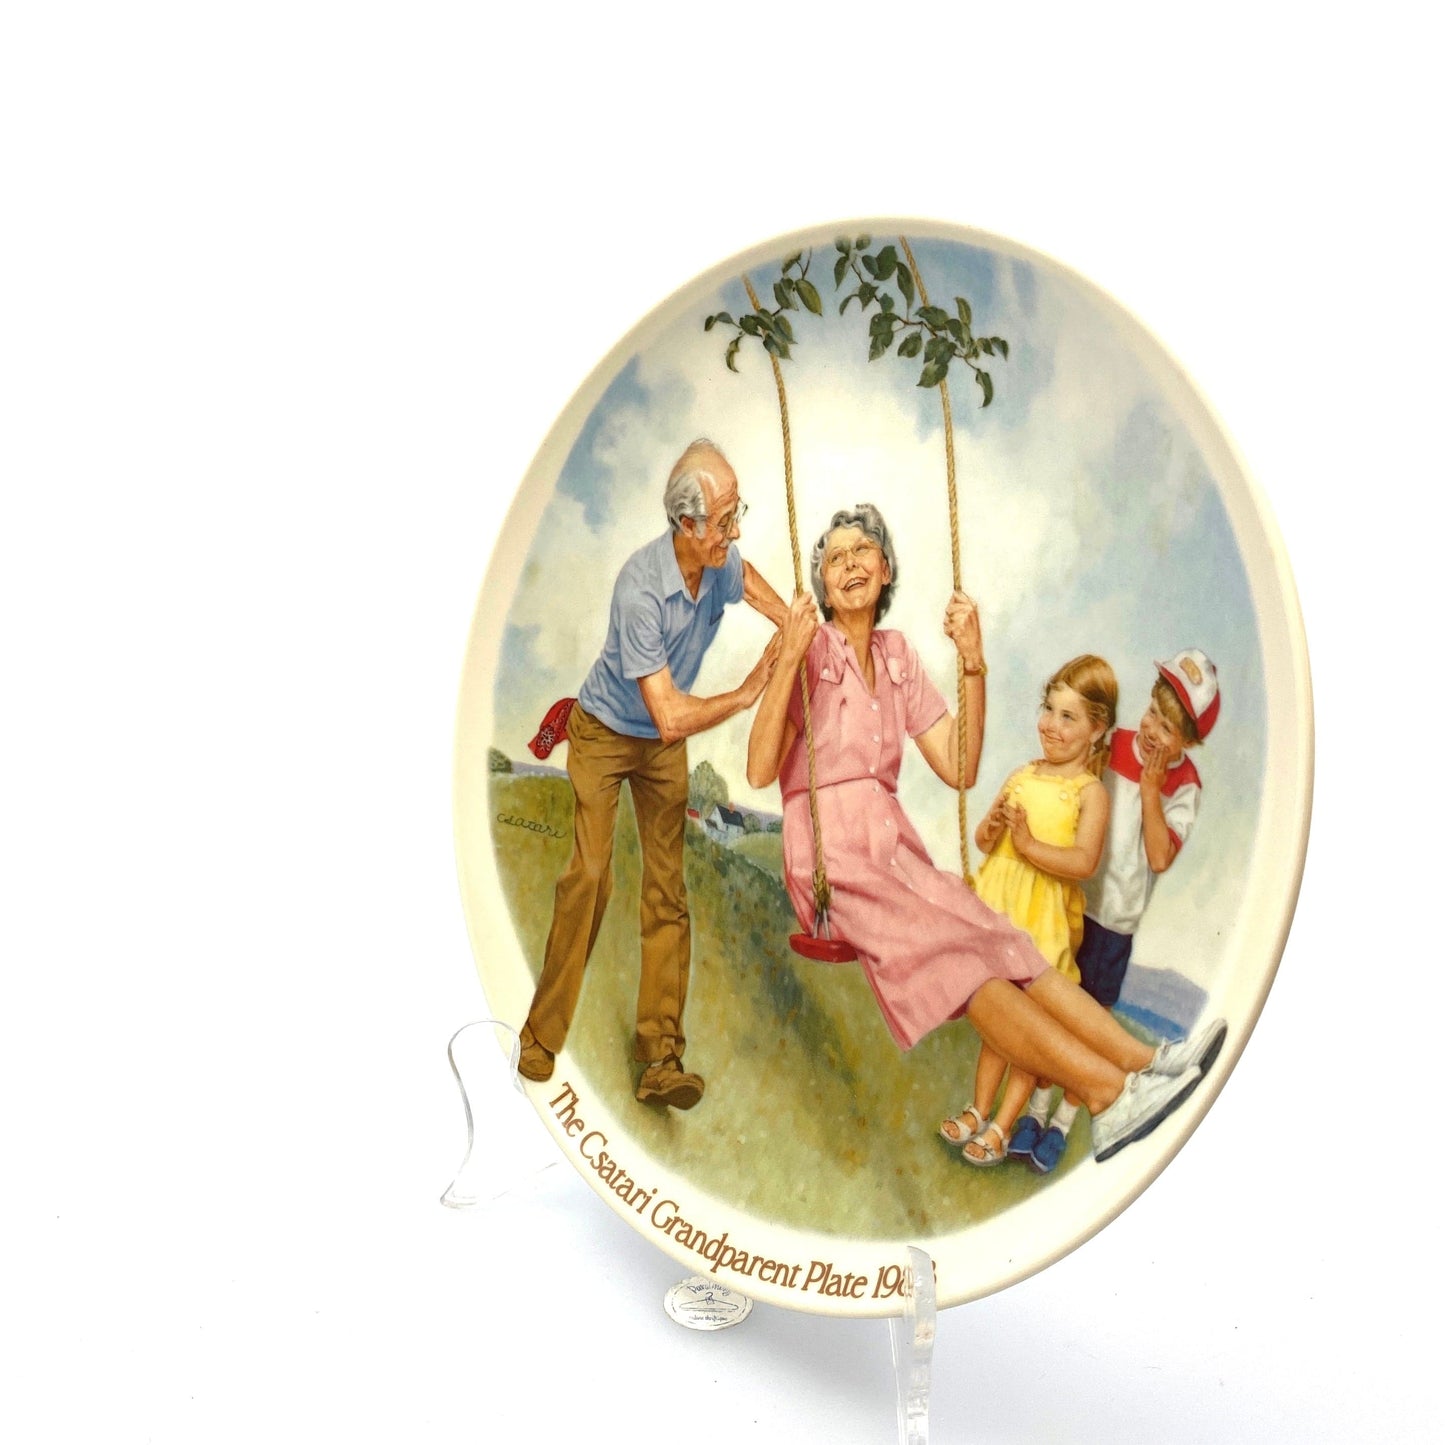 “The Swinger” RARE Joseph Csatari Grandparent Collector Plate 1983